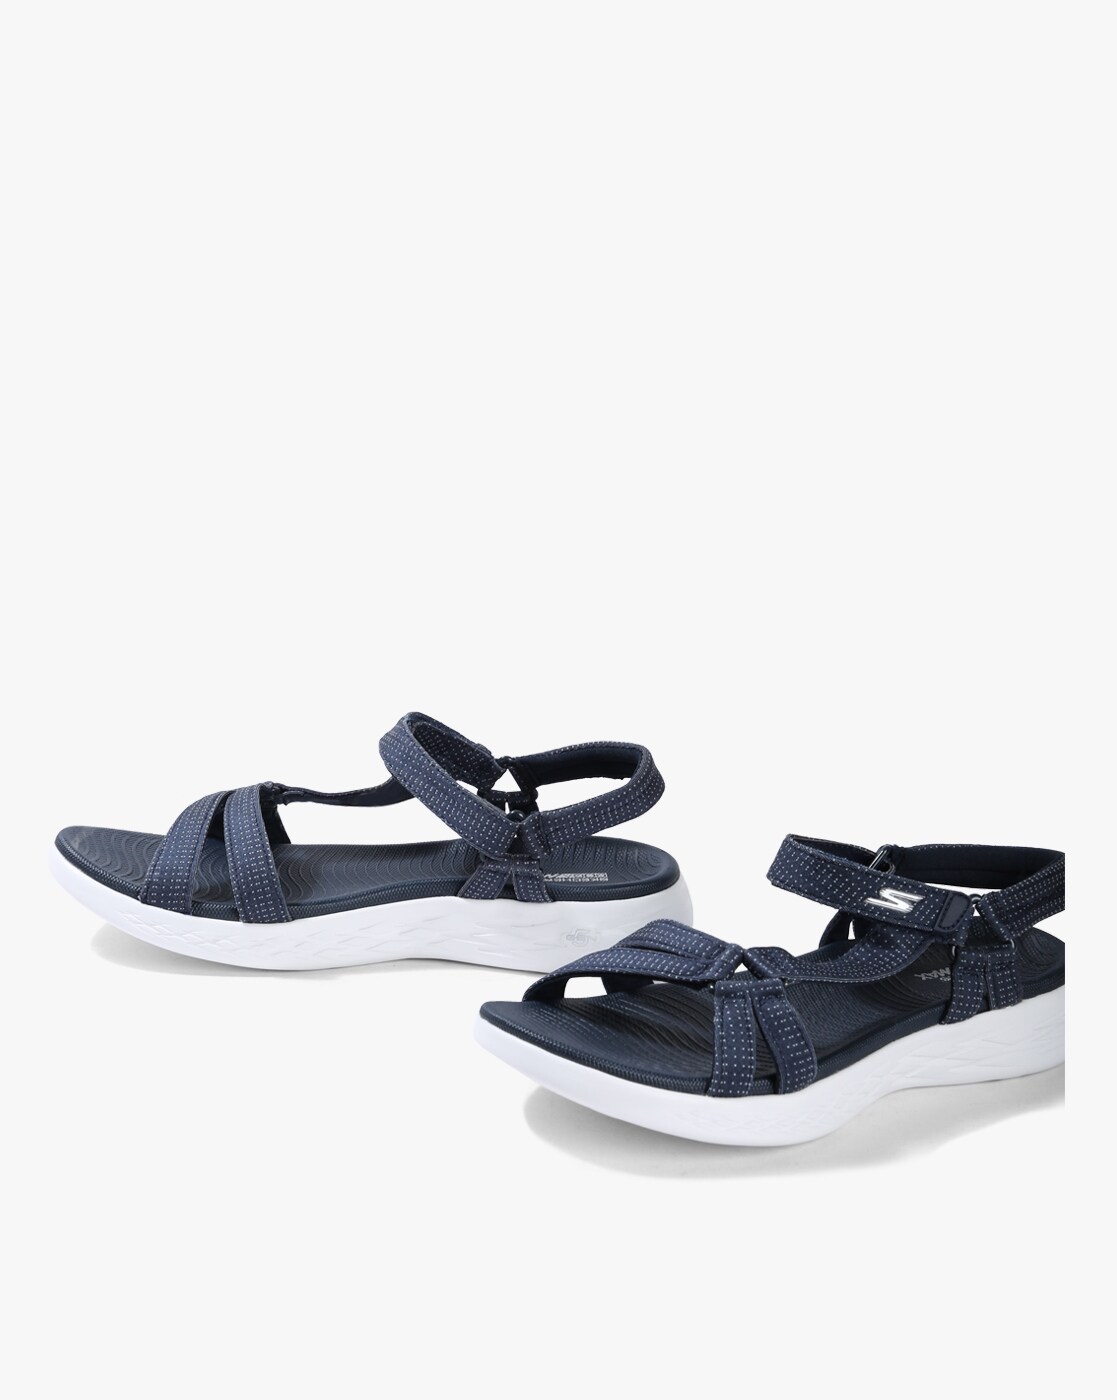 skechers navy blue sandals